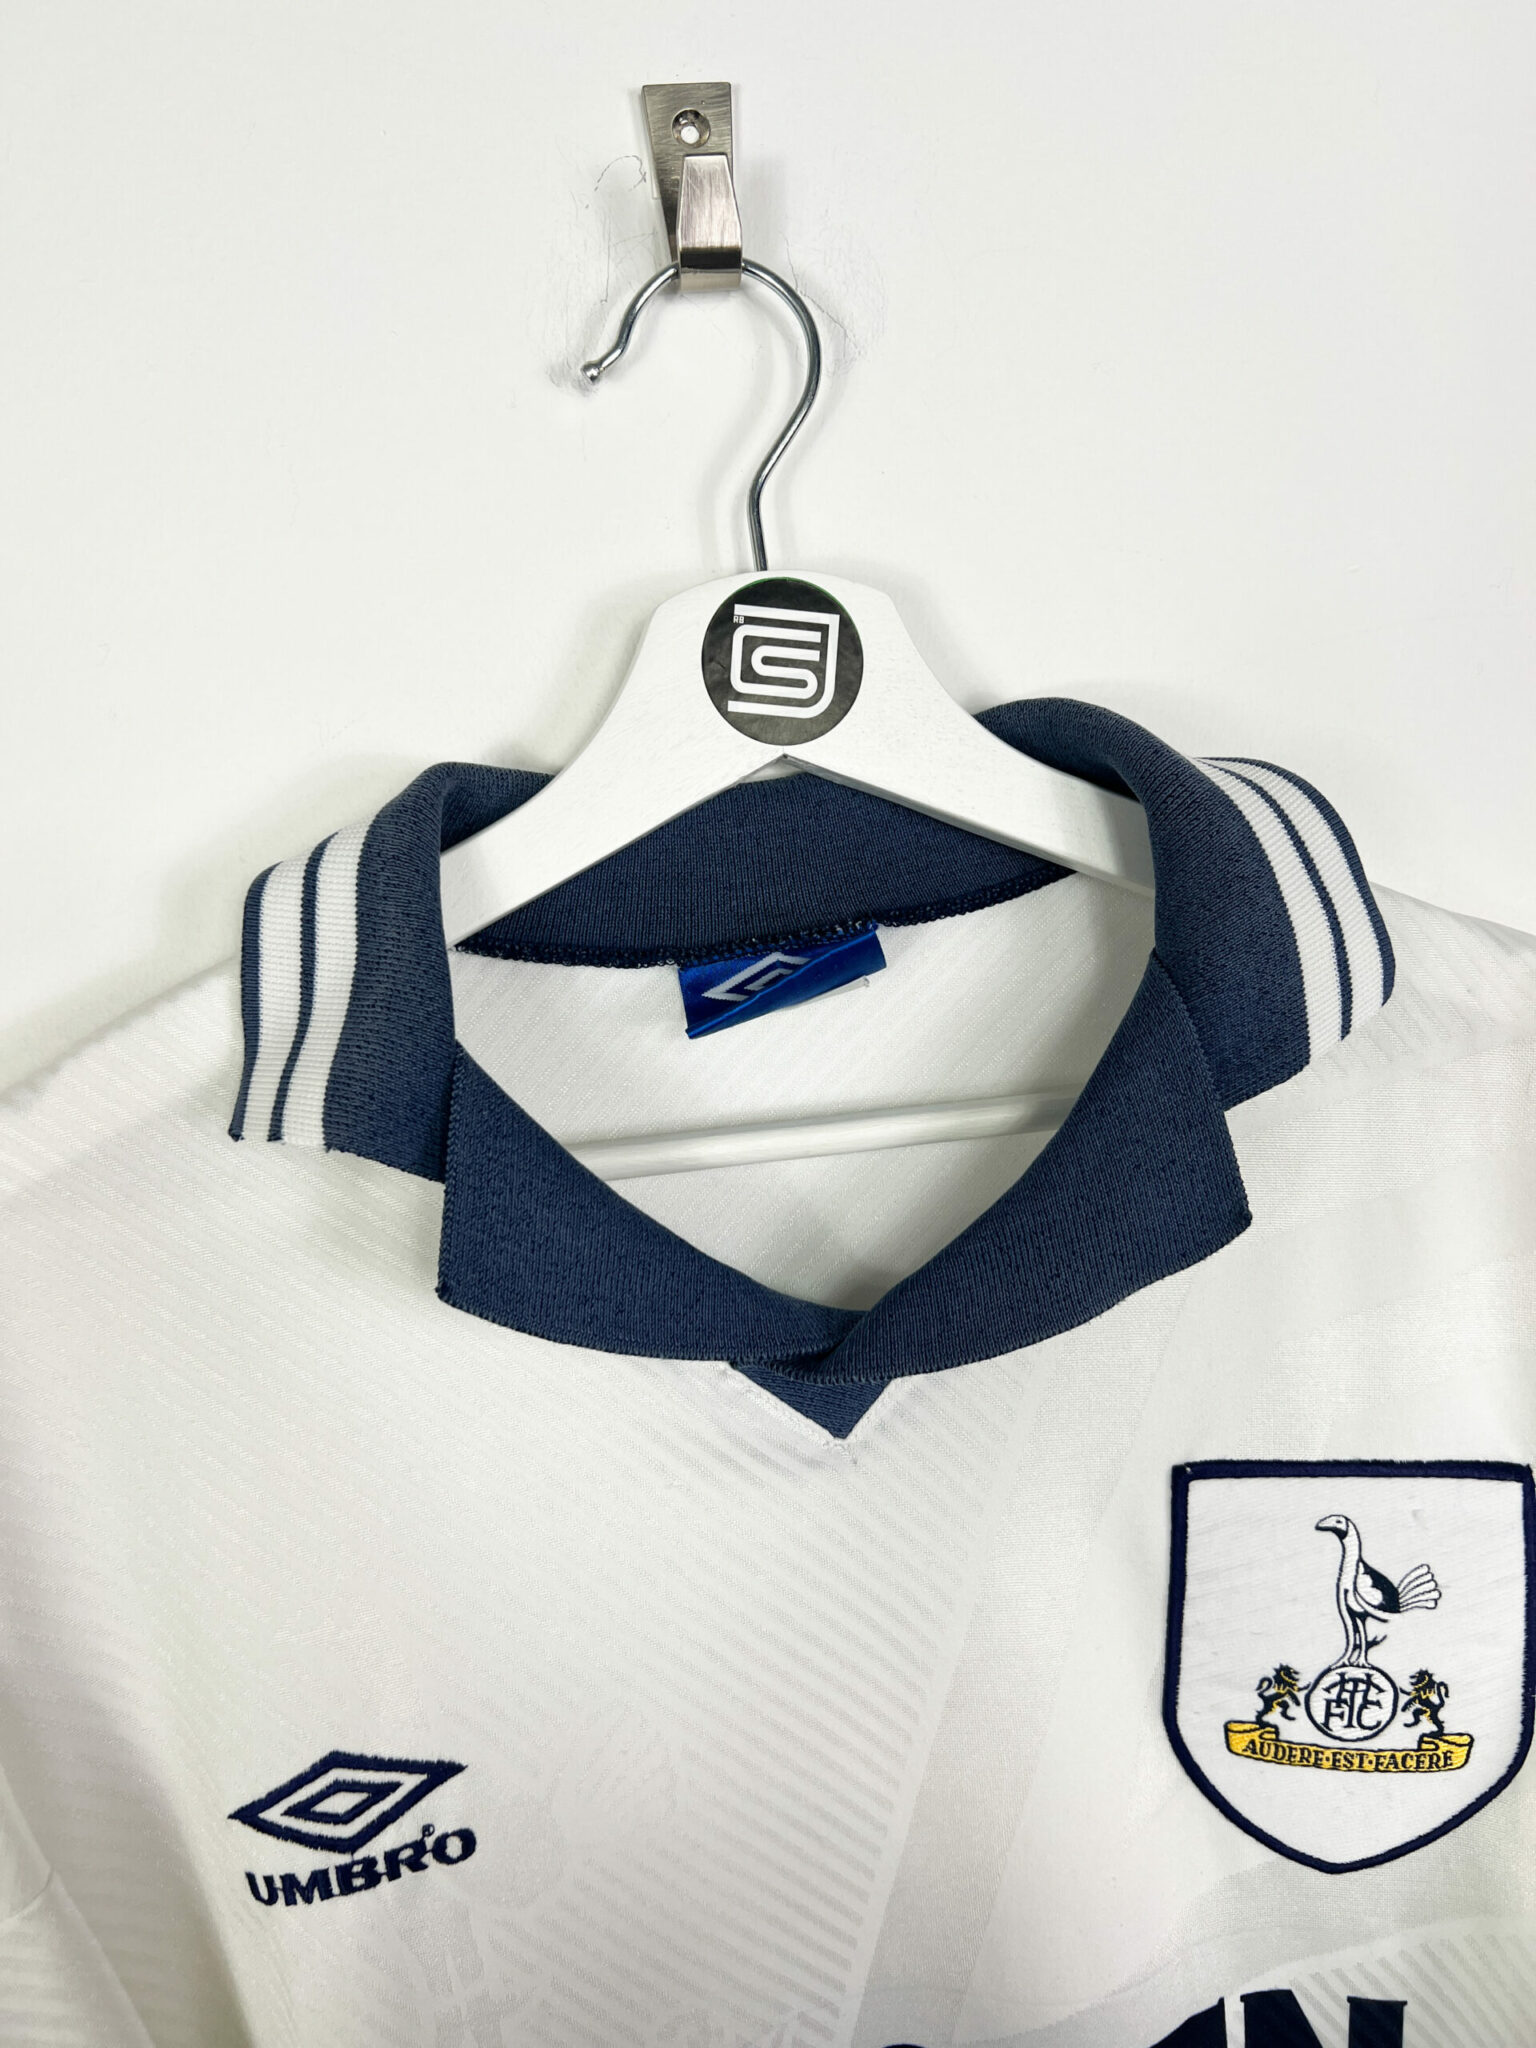 Tottenham Hotspur 1994-95 GK 1 Kit